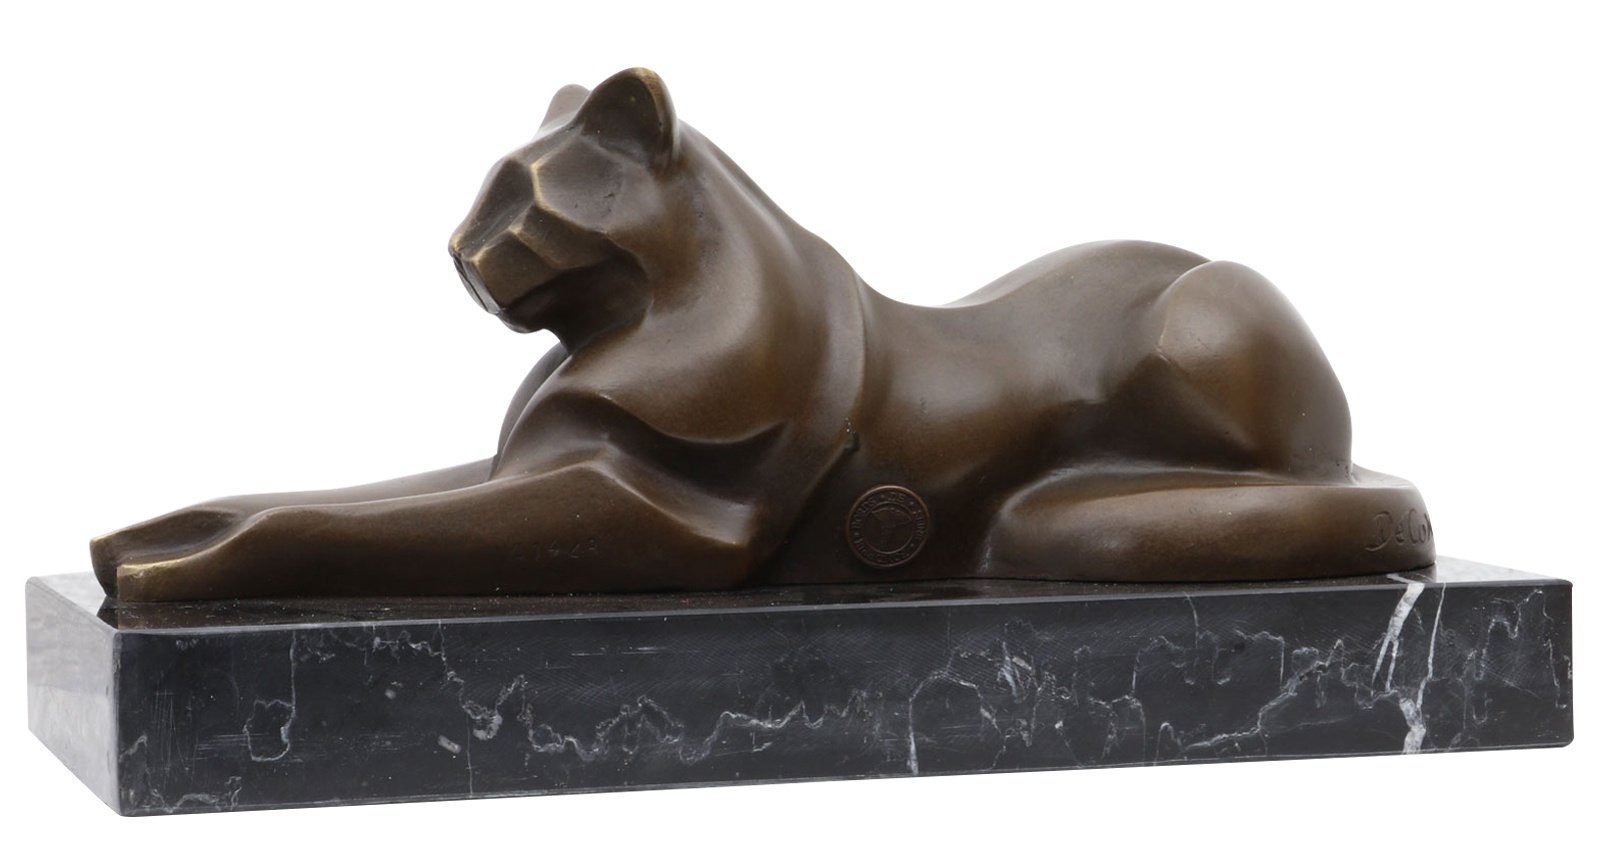 Aubaho Skulptur Bronzeskulptur 26cm Antik-Stil Katze Figur Bronze im Statue